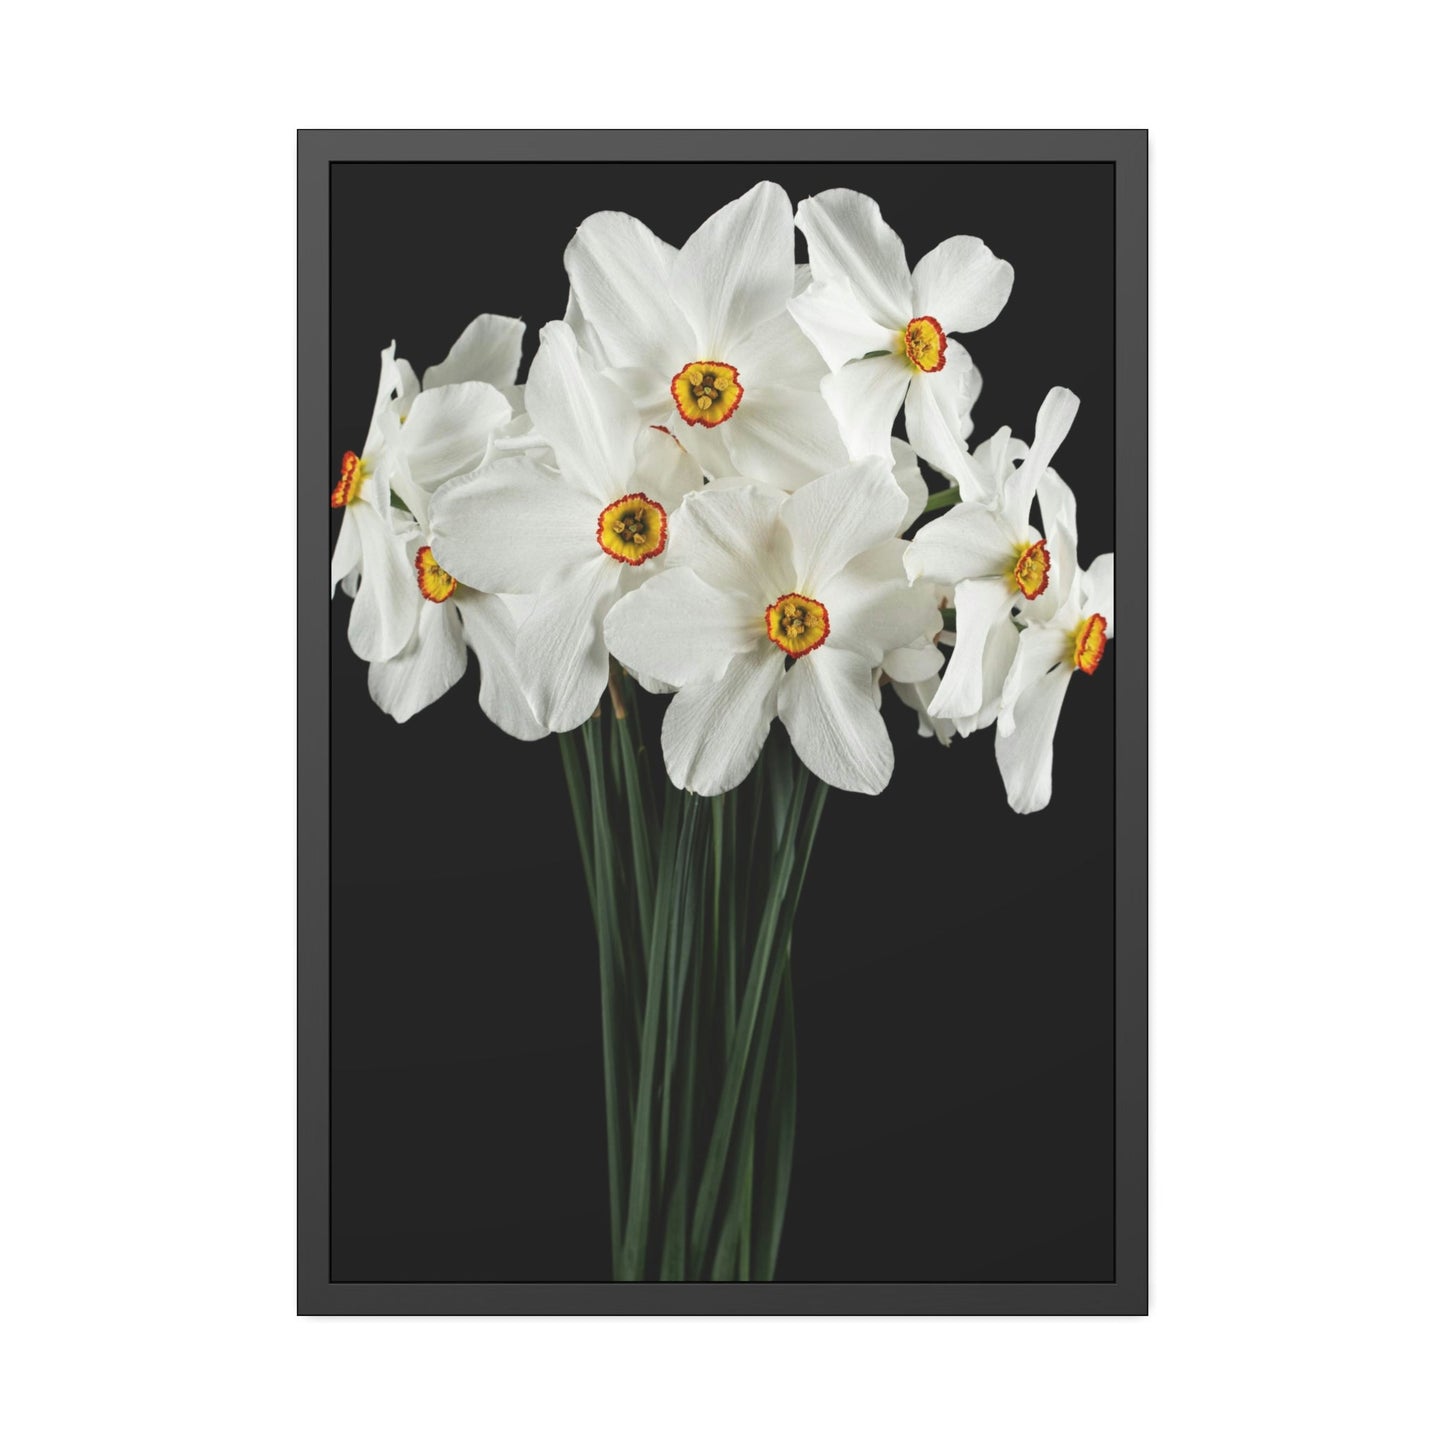 Daffodil Euphoria: A Blissful Awakening